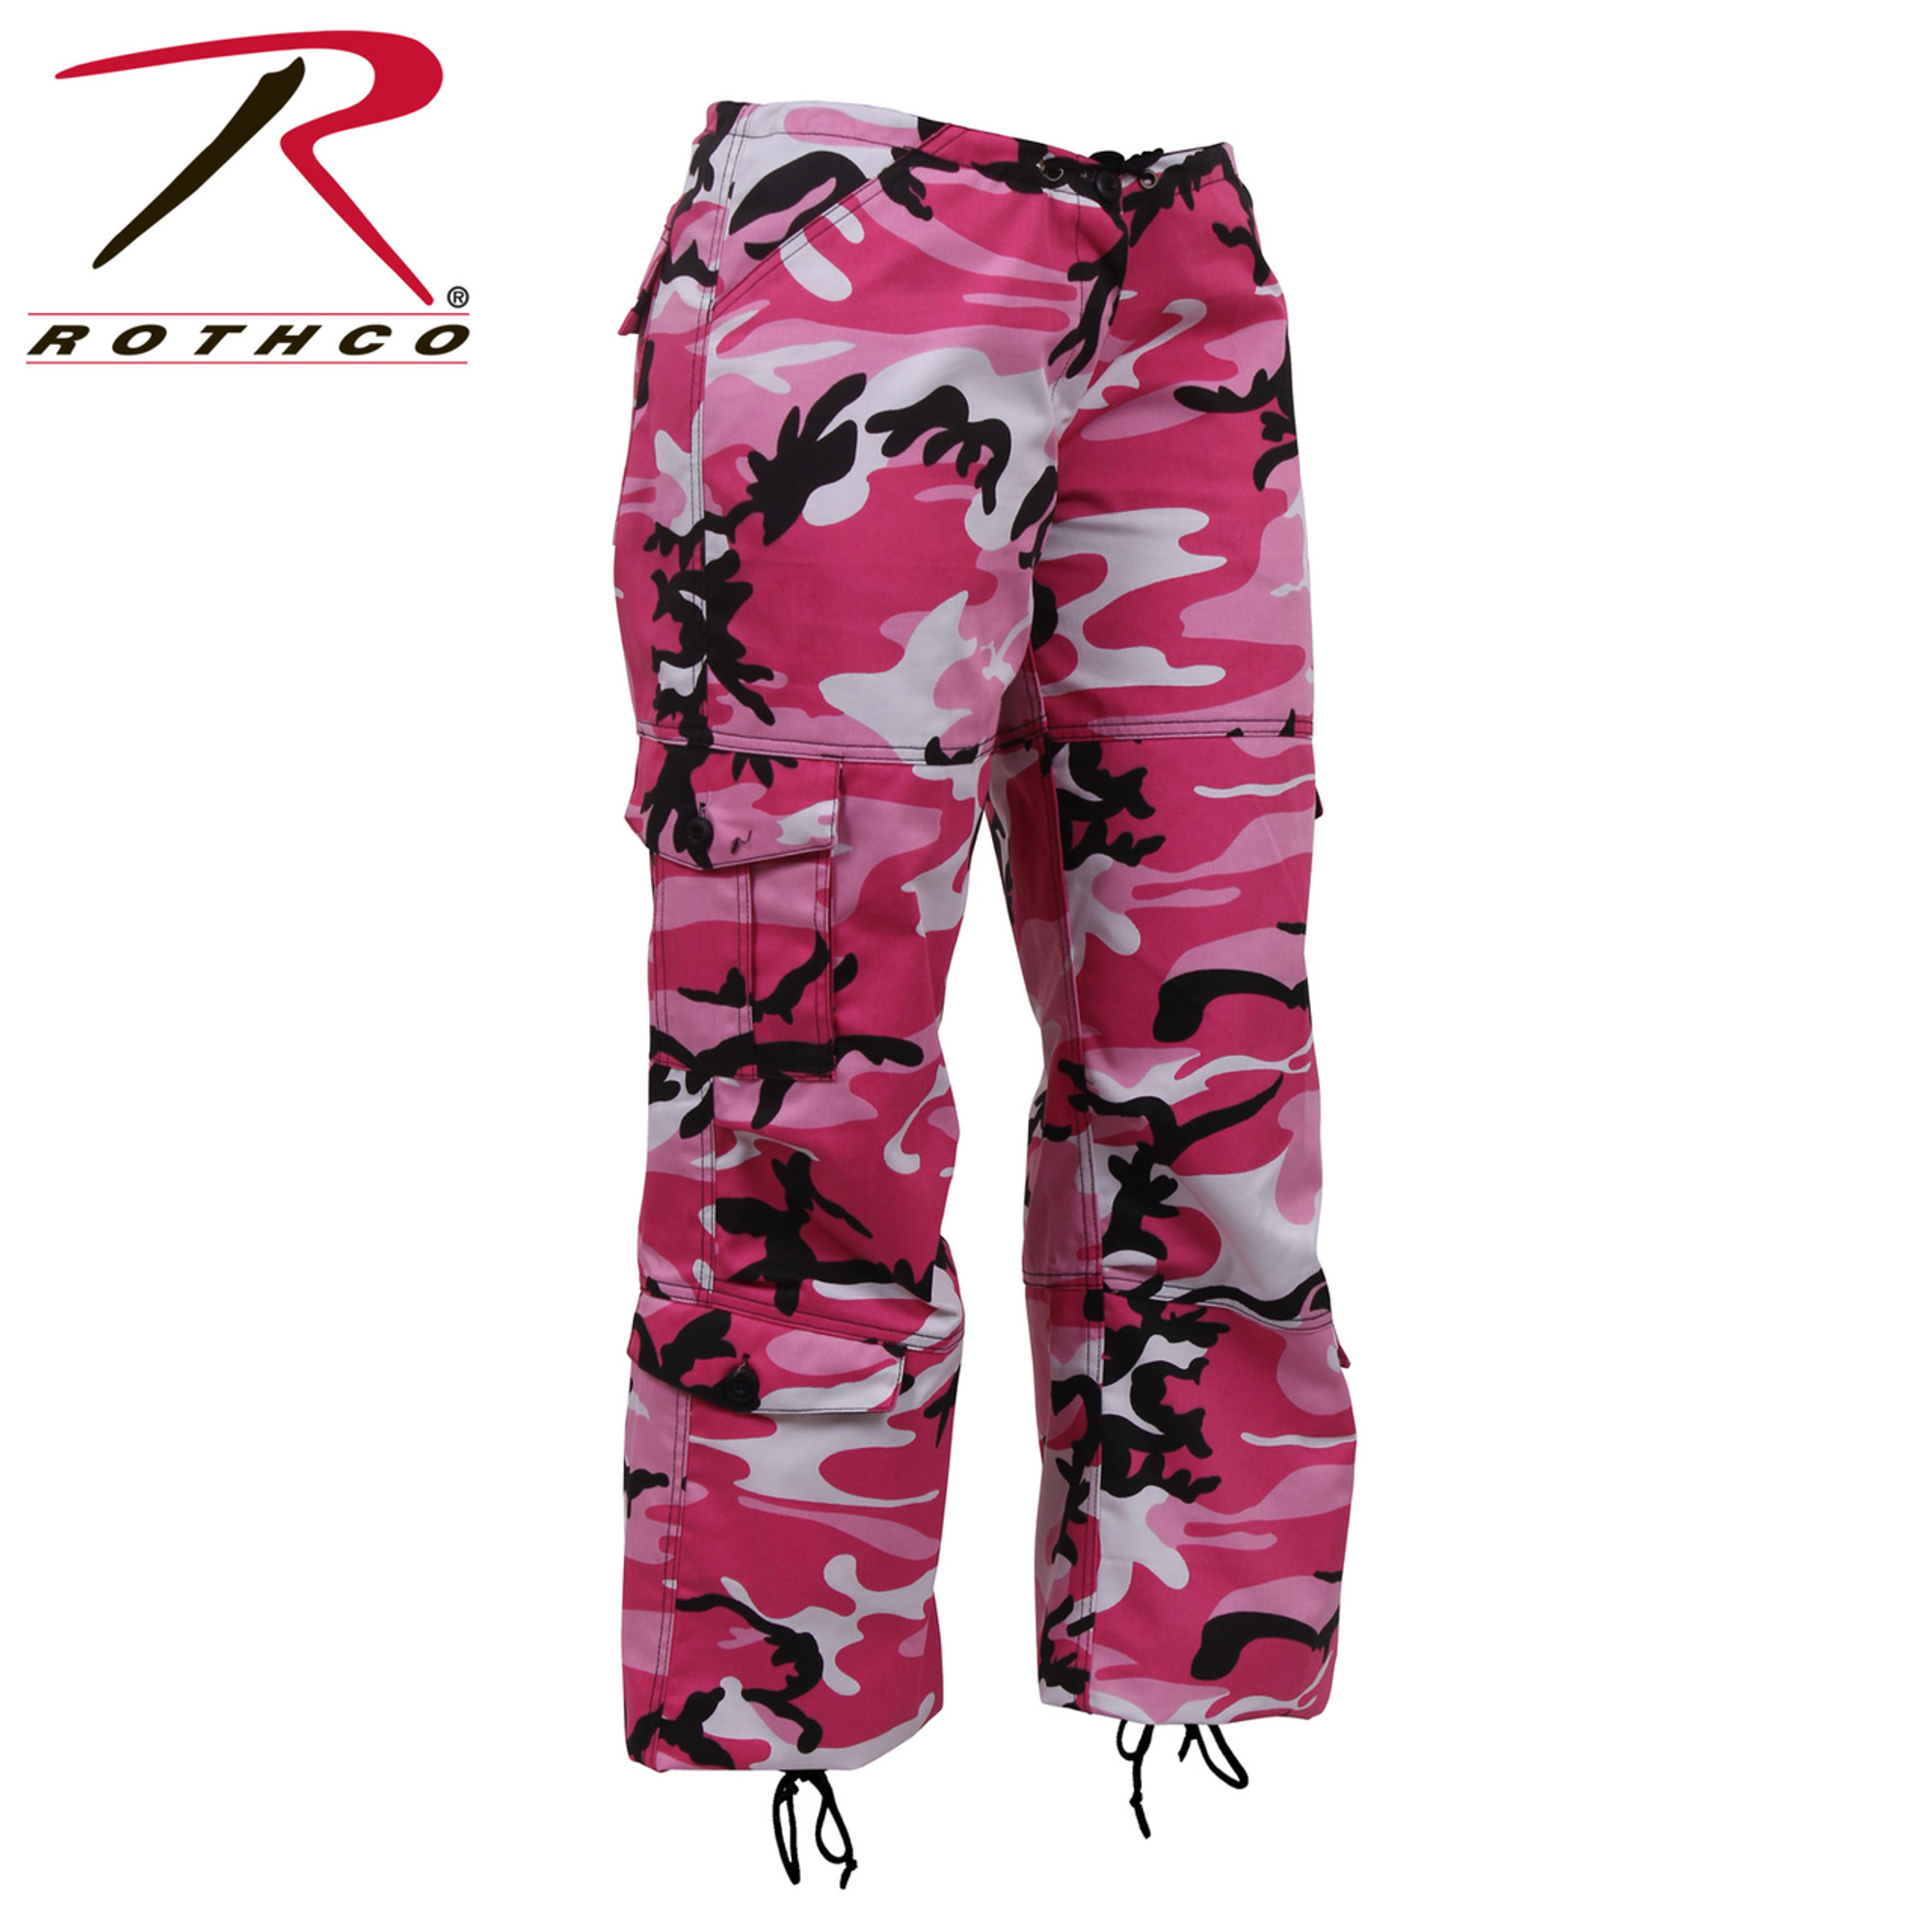 Rothco Women's Paratrooper Coloured Camo Fatigues - Pink Camo